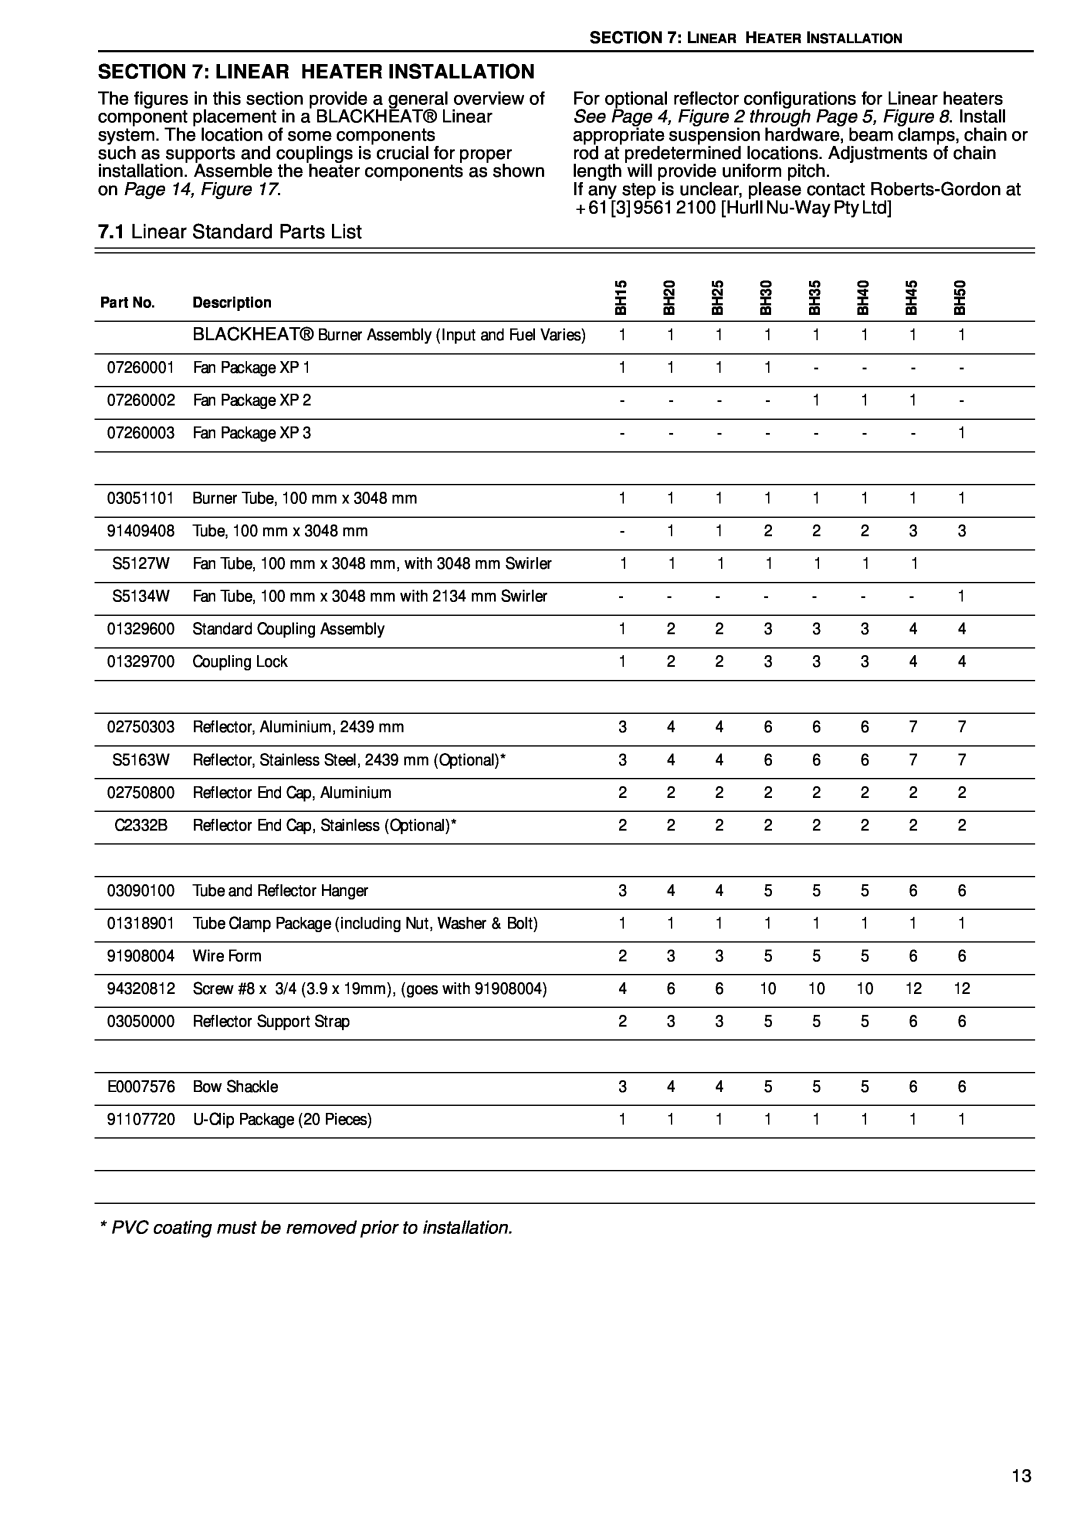 Roberts Gorden BH15 service manual 7.1Linear Standard Parts List, Linear Heater Installation 